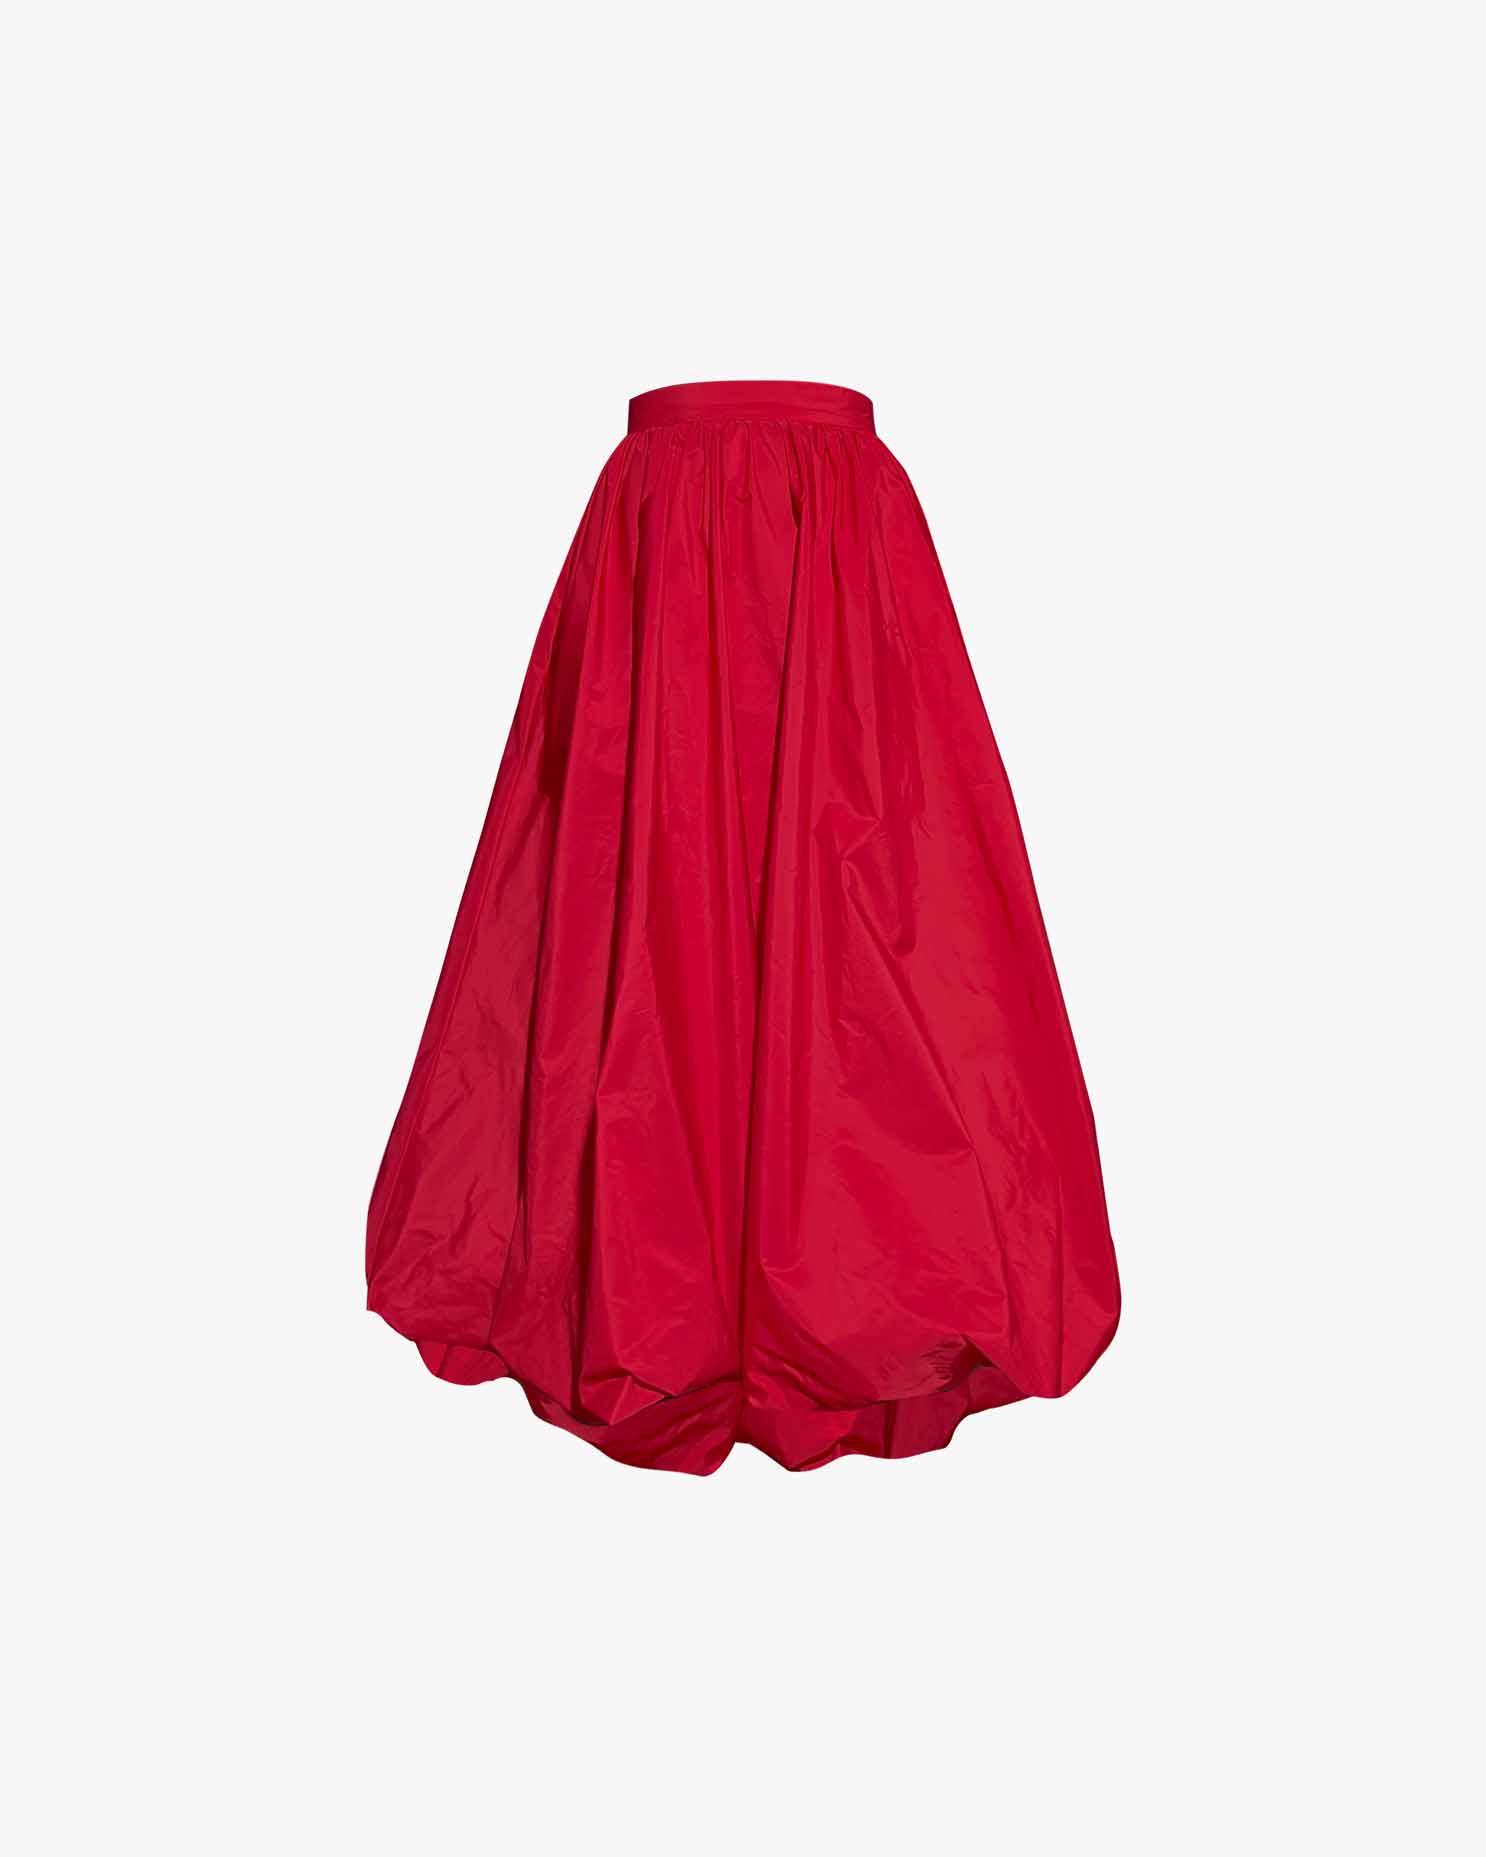 San Bernardino puffball skirt cherry red